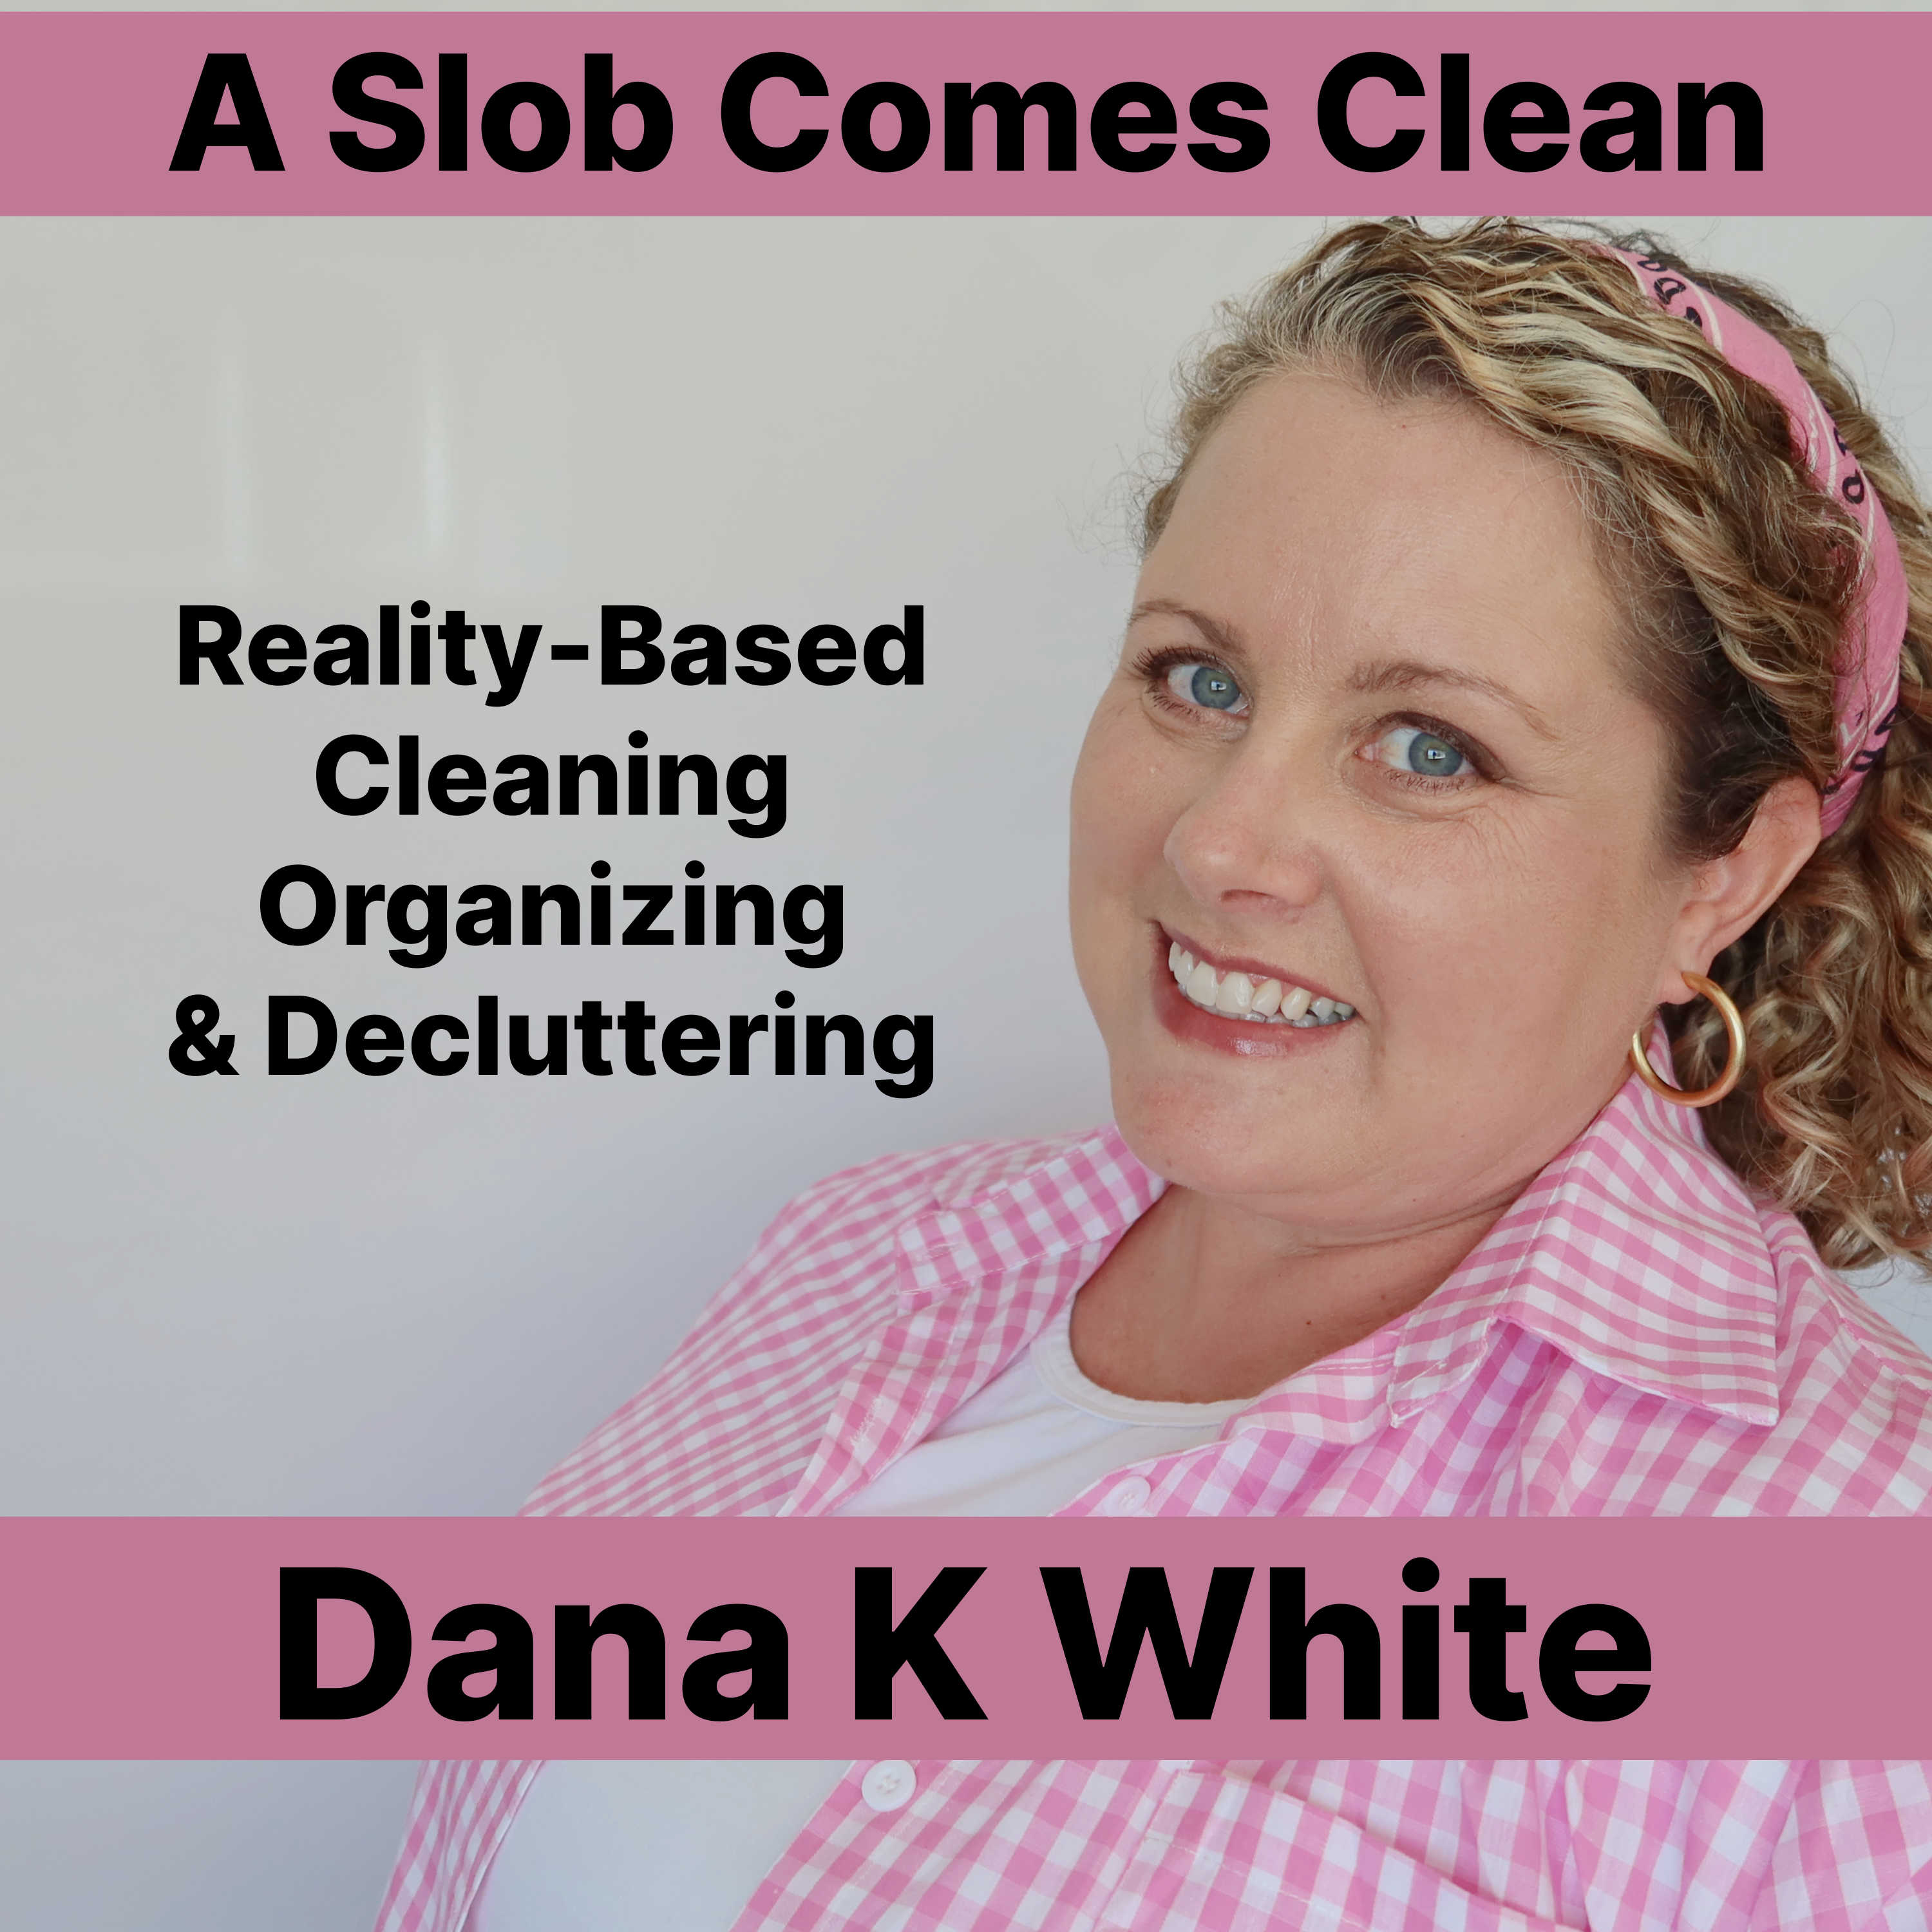 podcasts Archives - Dana K. White: A Slob Comes Clean:podcasts Archives - Dana K. White: A Slob Comes Clean